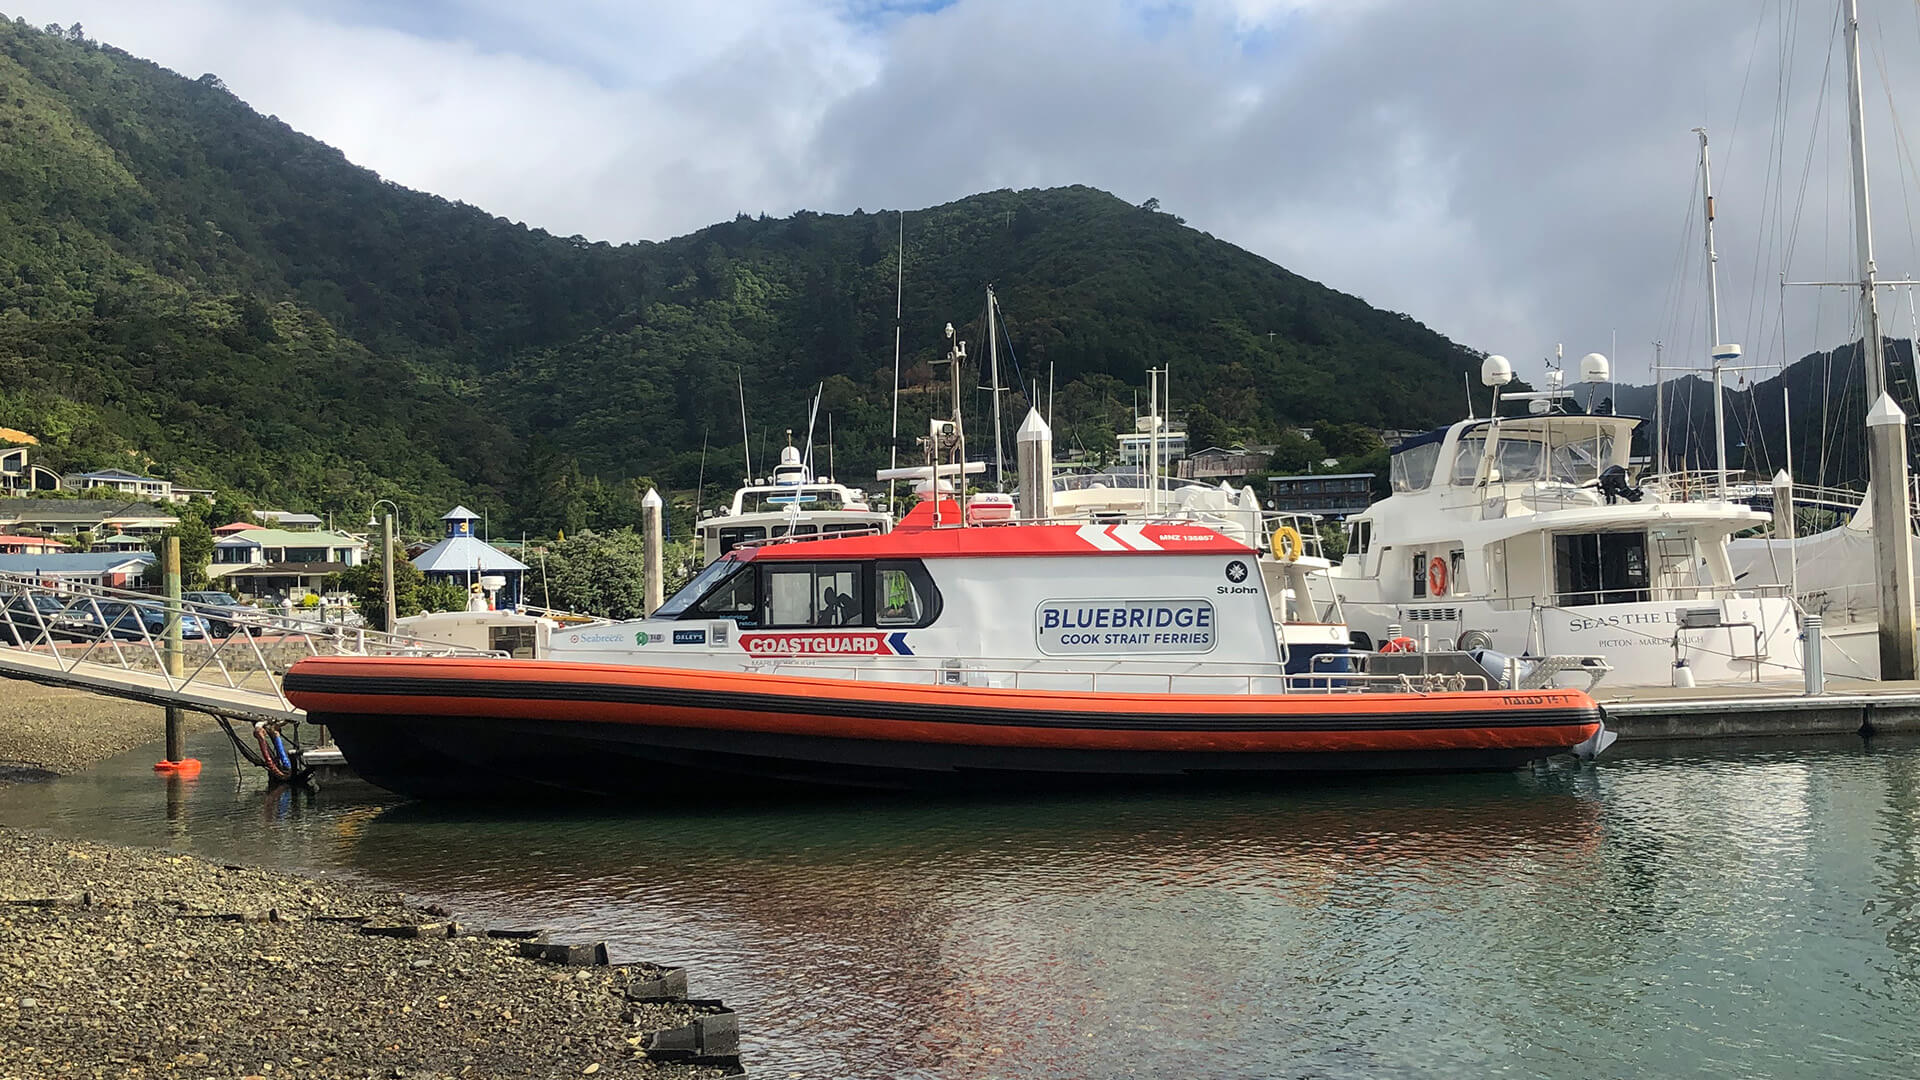 Picton Coastguard boat Sponsored by Bluebridge